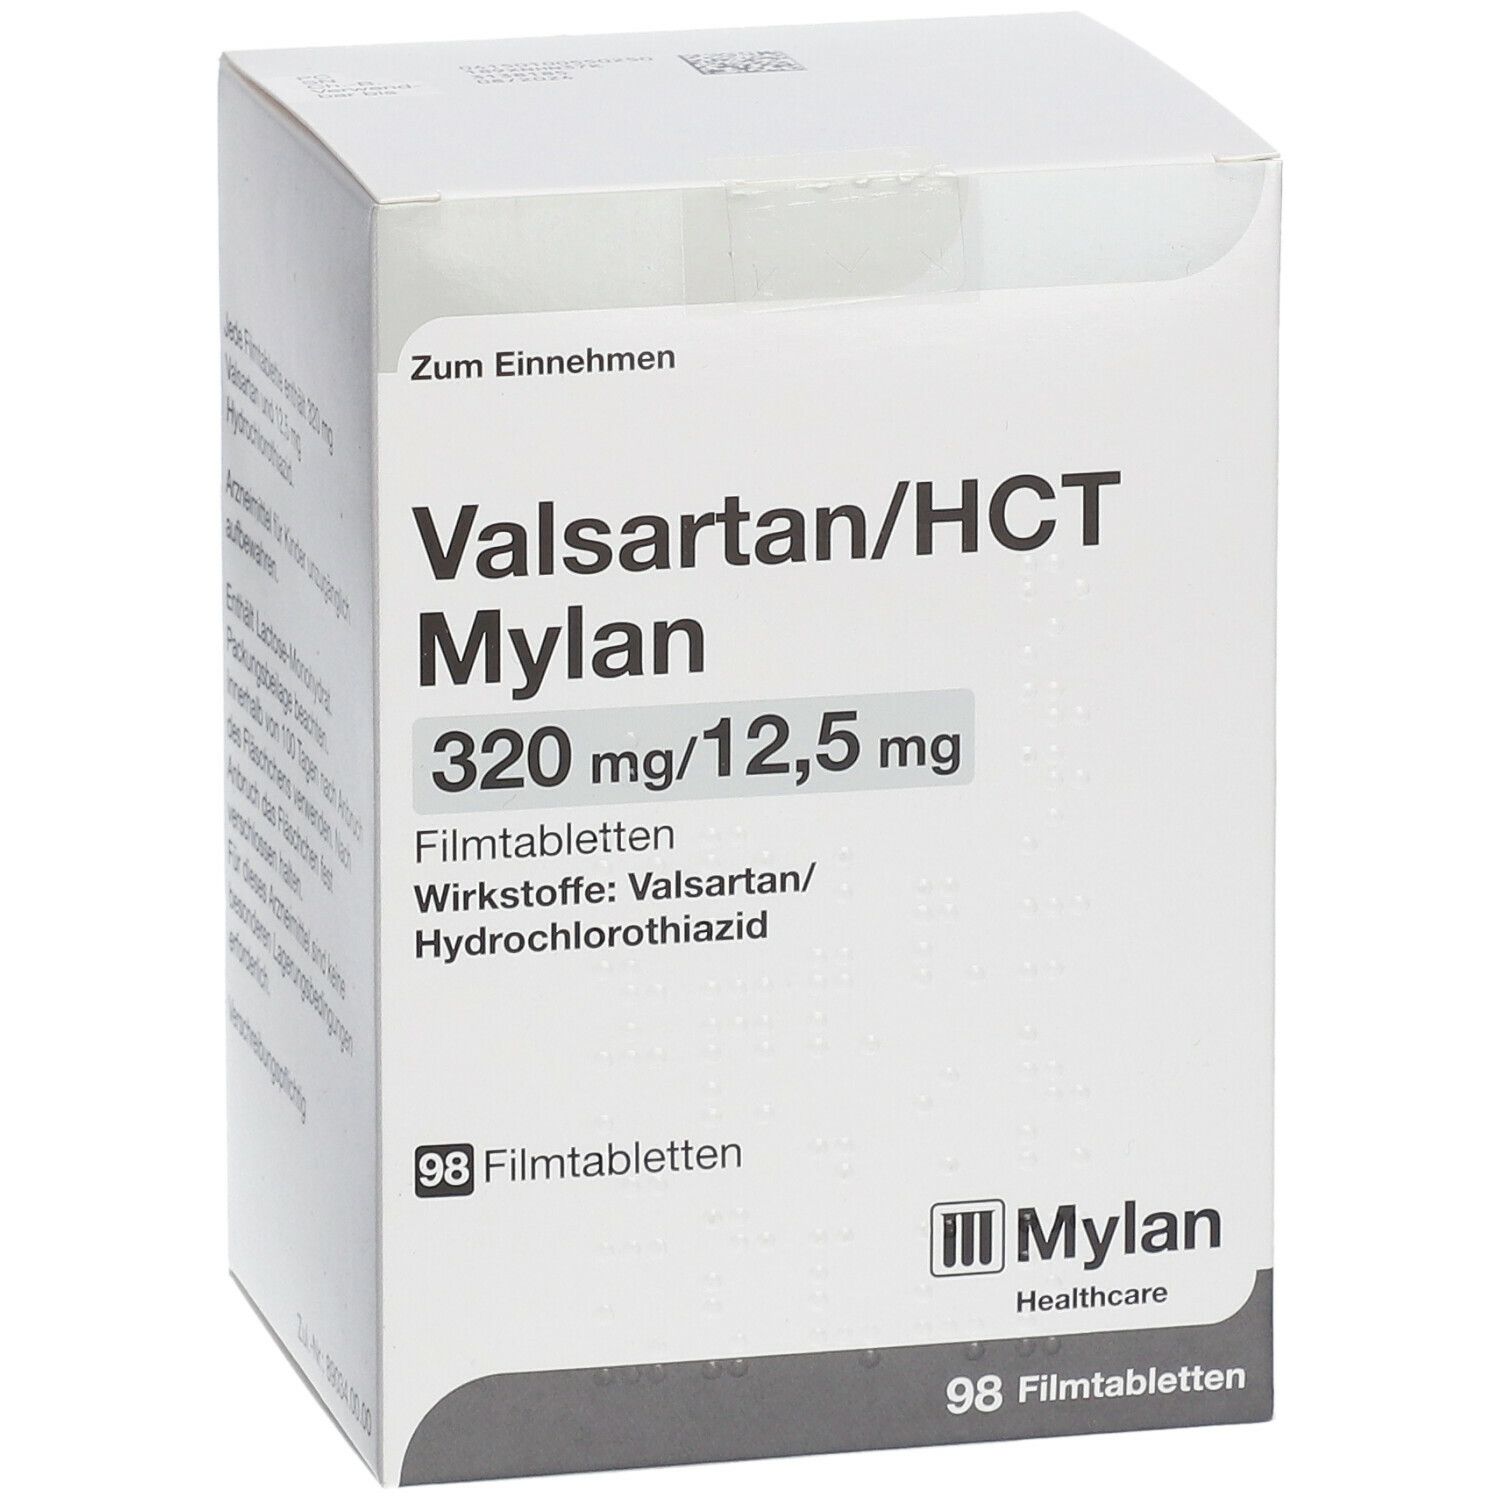 VALSARTAN/HCT MY320/12.5 mg